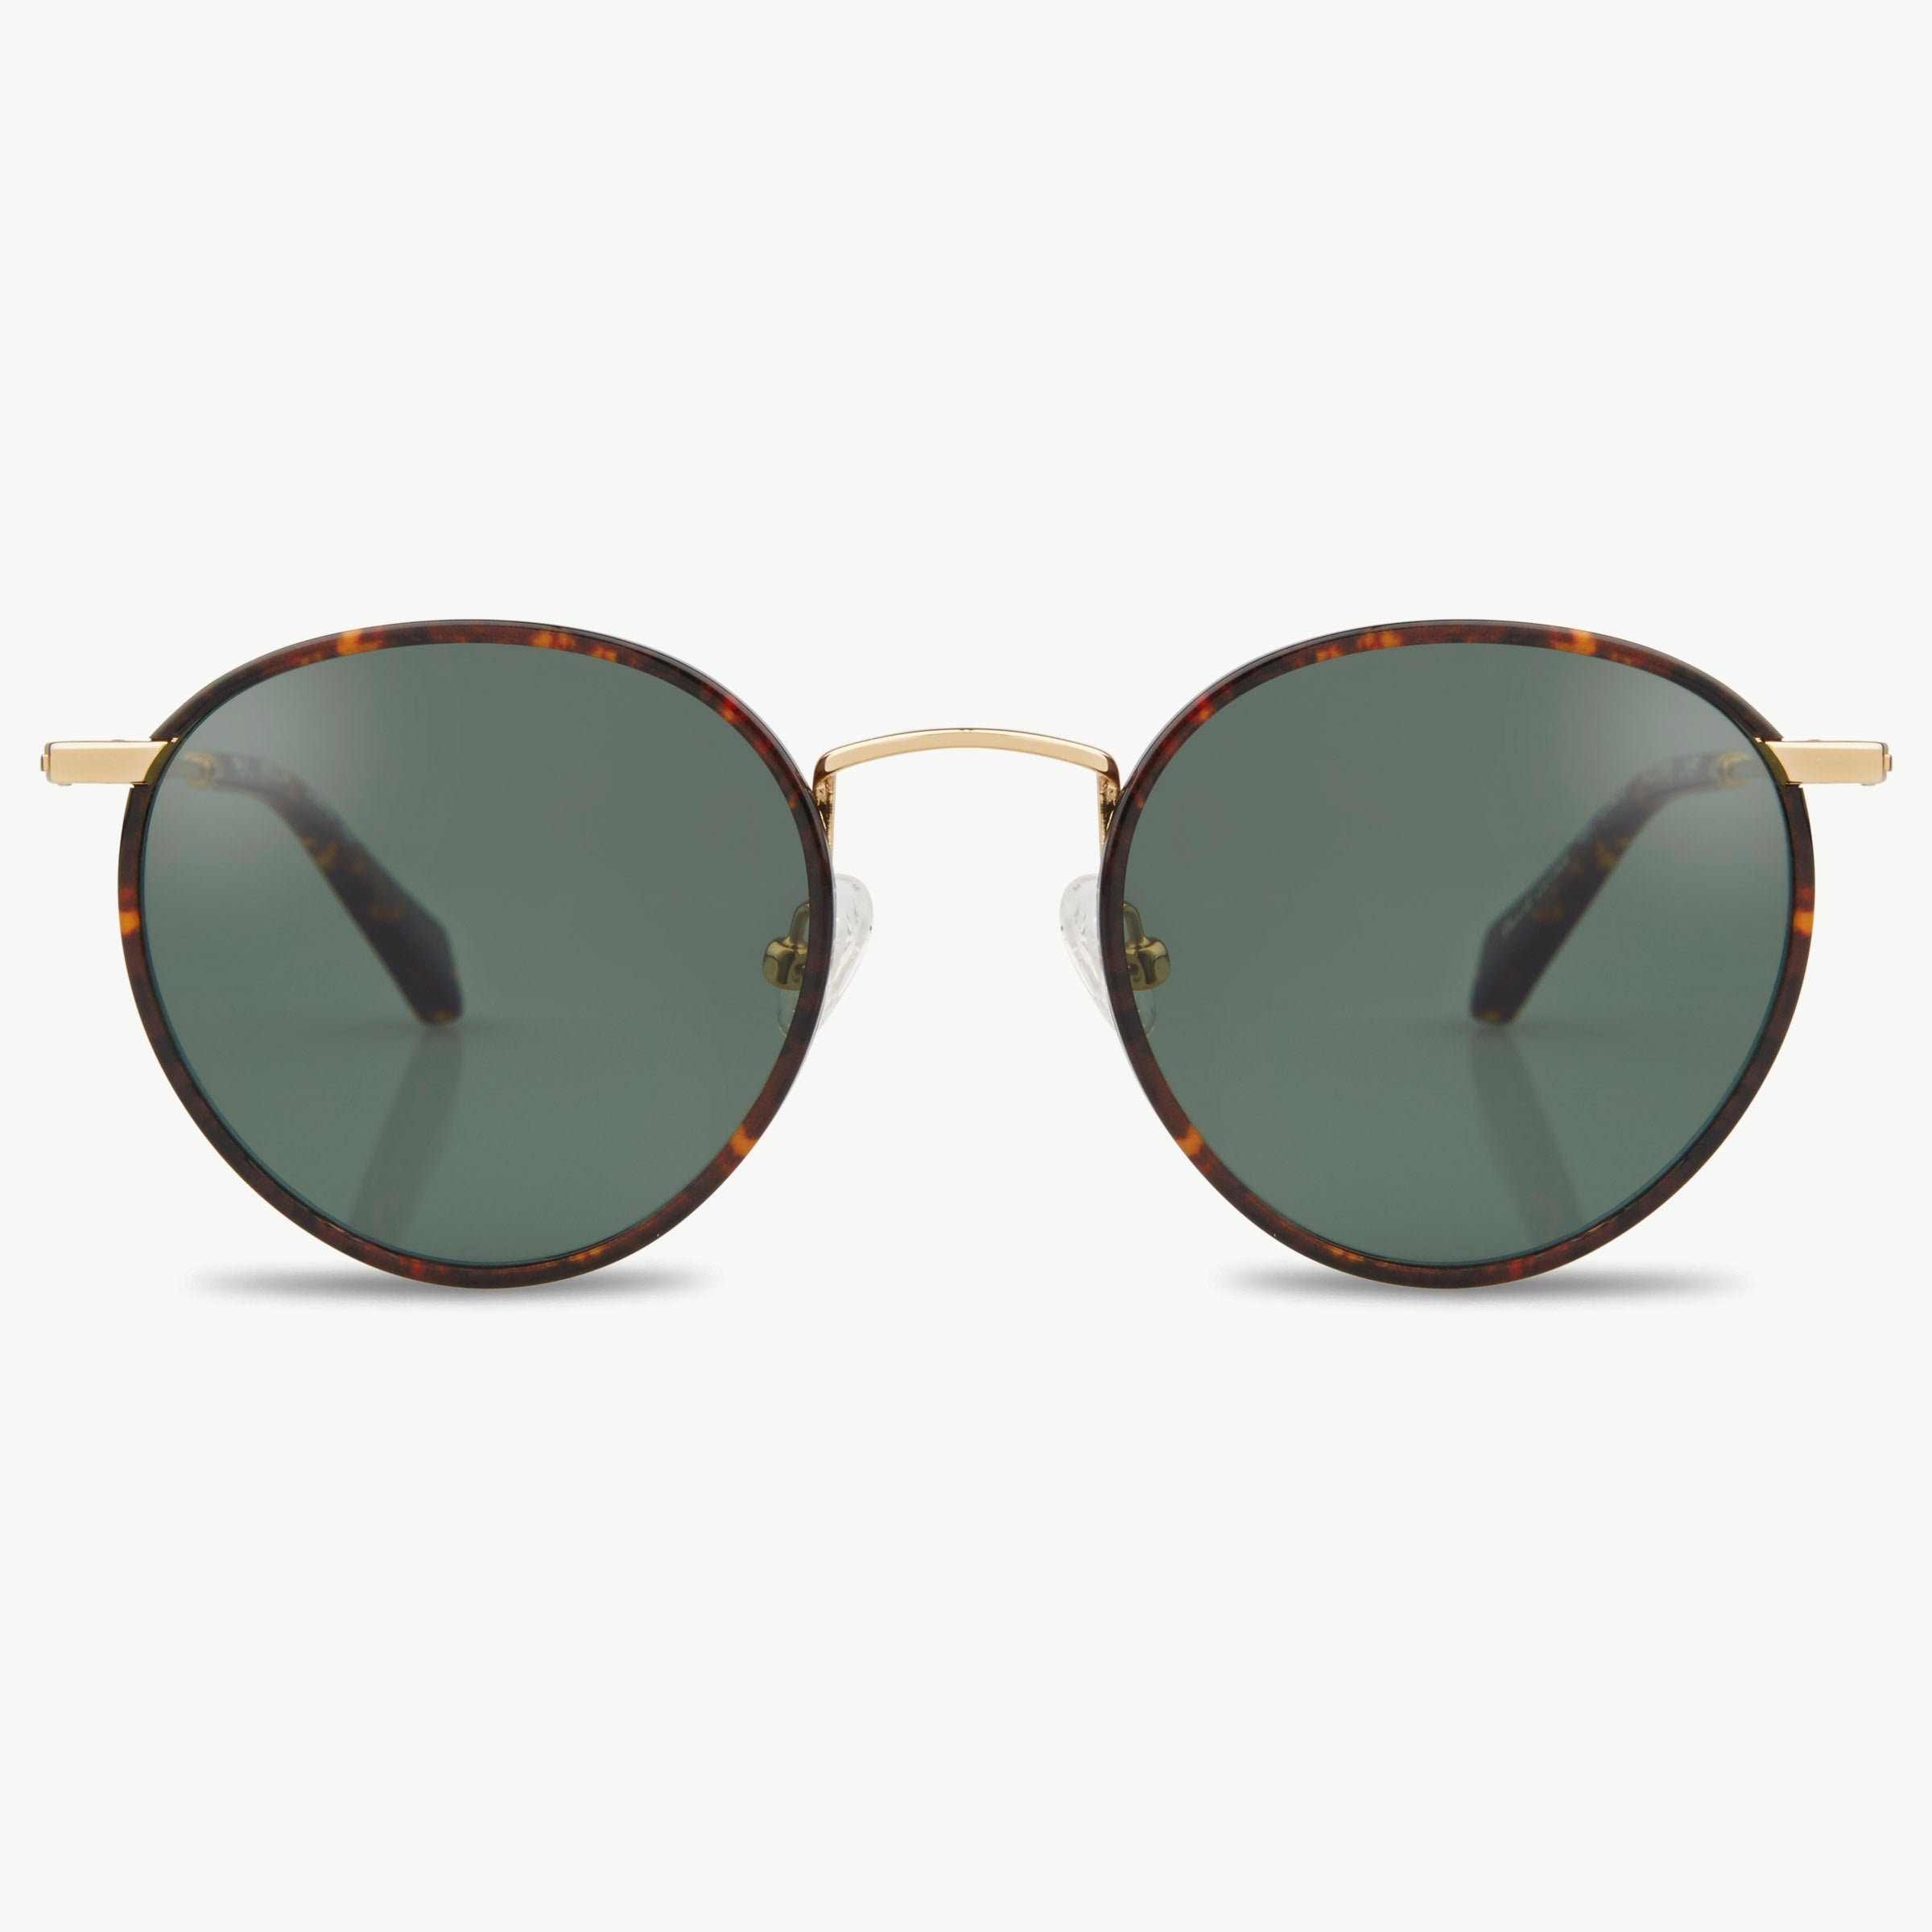 ONOS Breeze Green Polycarbonate Lens Tortoise Frame Sunglasses